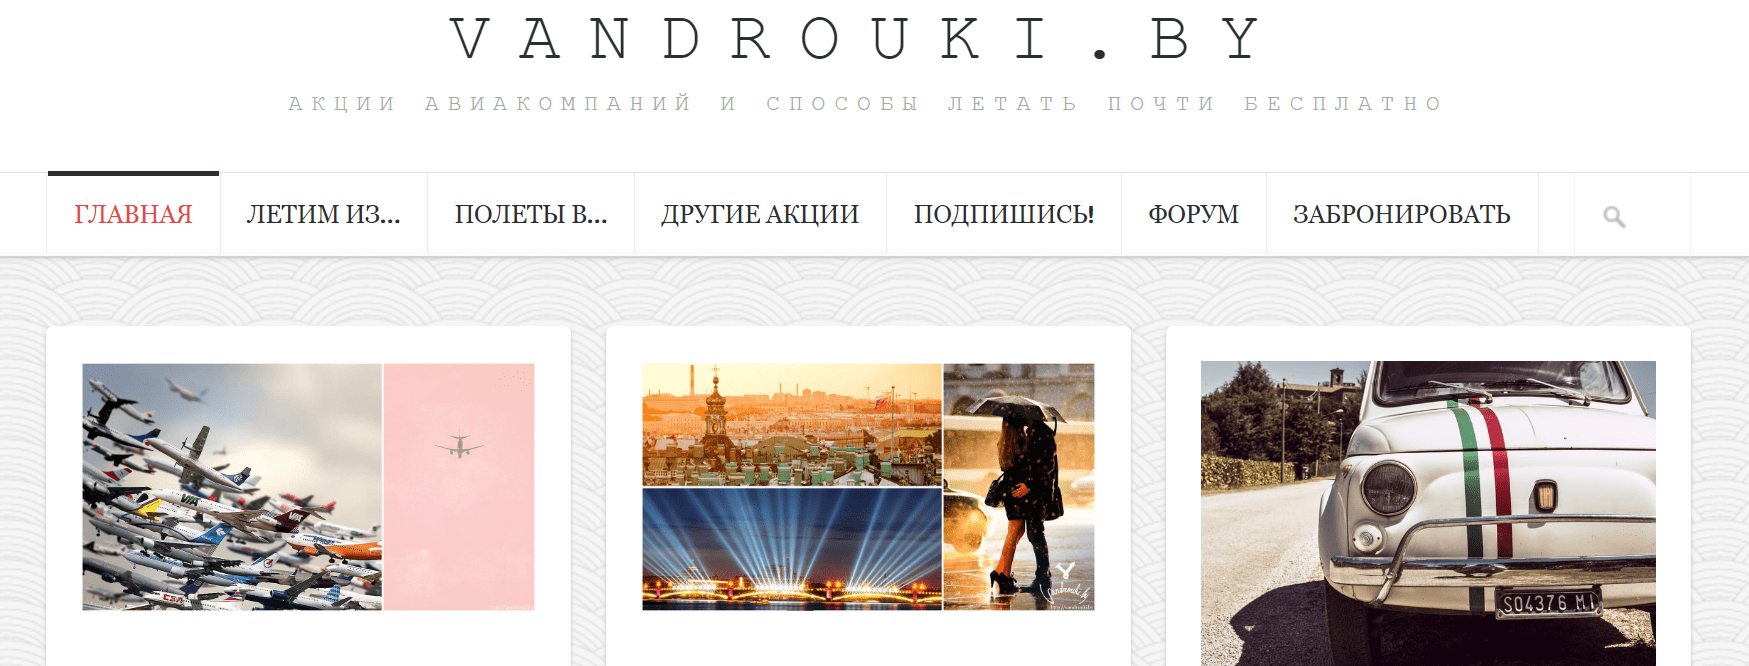 Вандроуки Бай (vandrouki.by) – официальный сайт